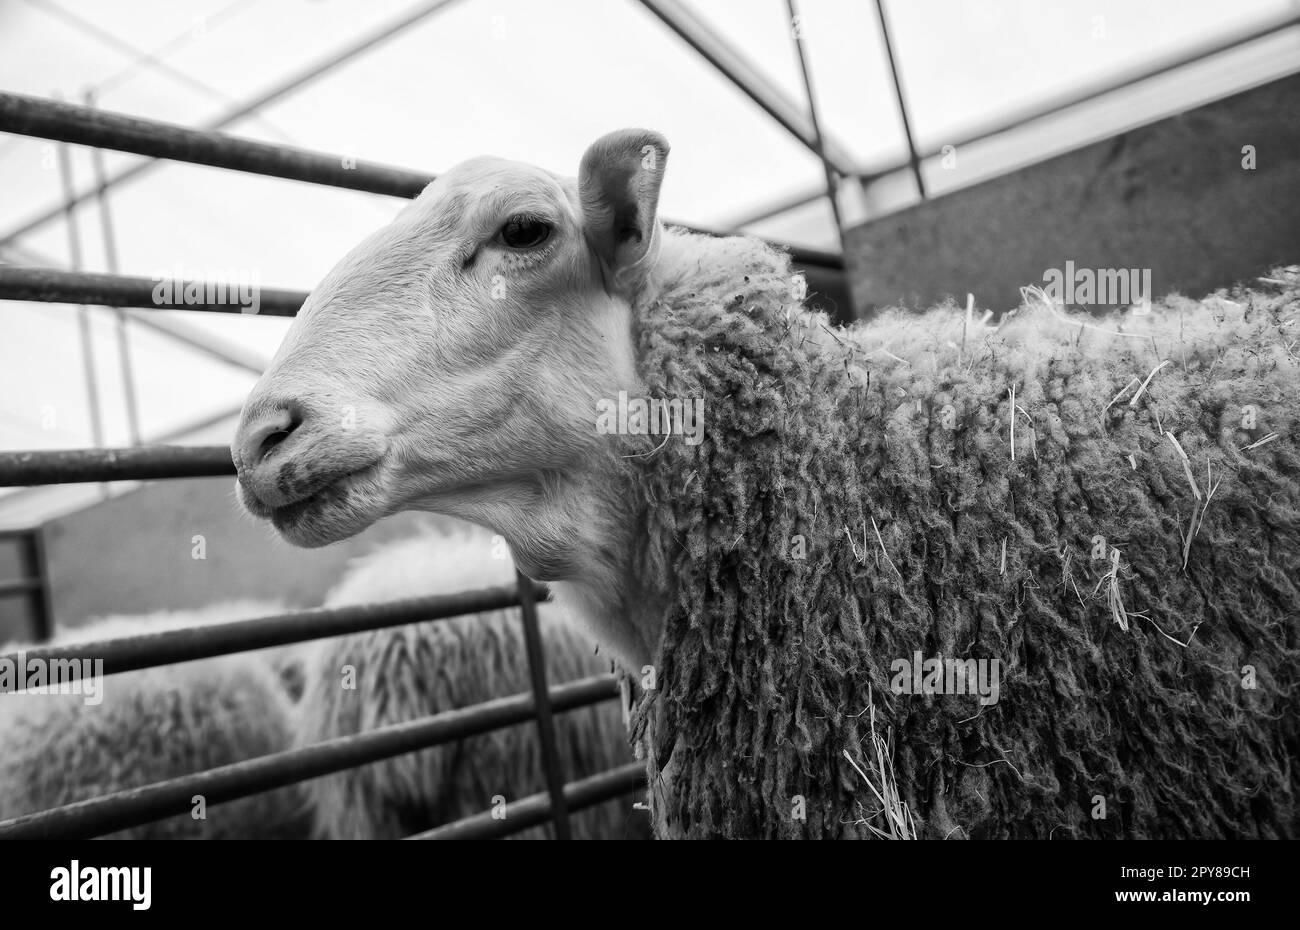 Sheep on a farm Stock Photo